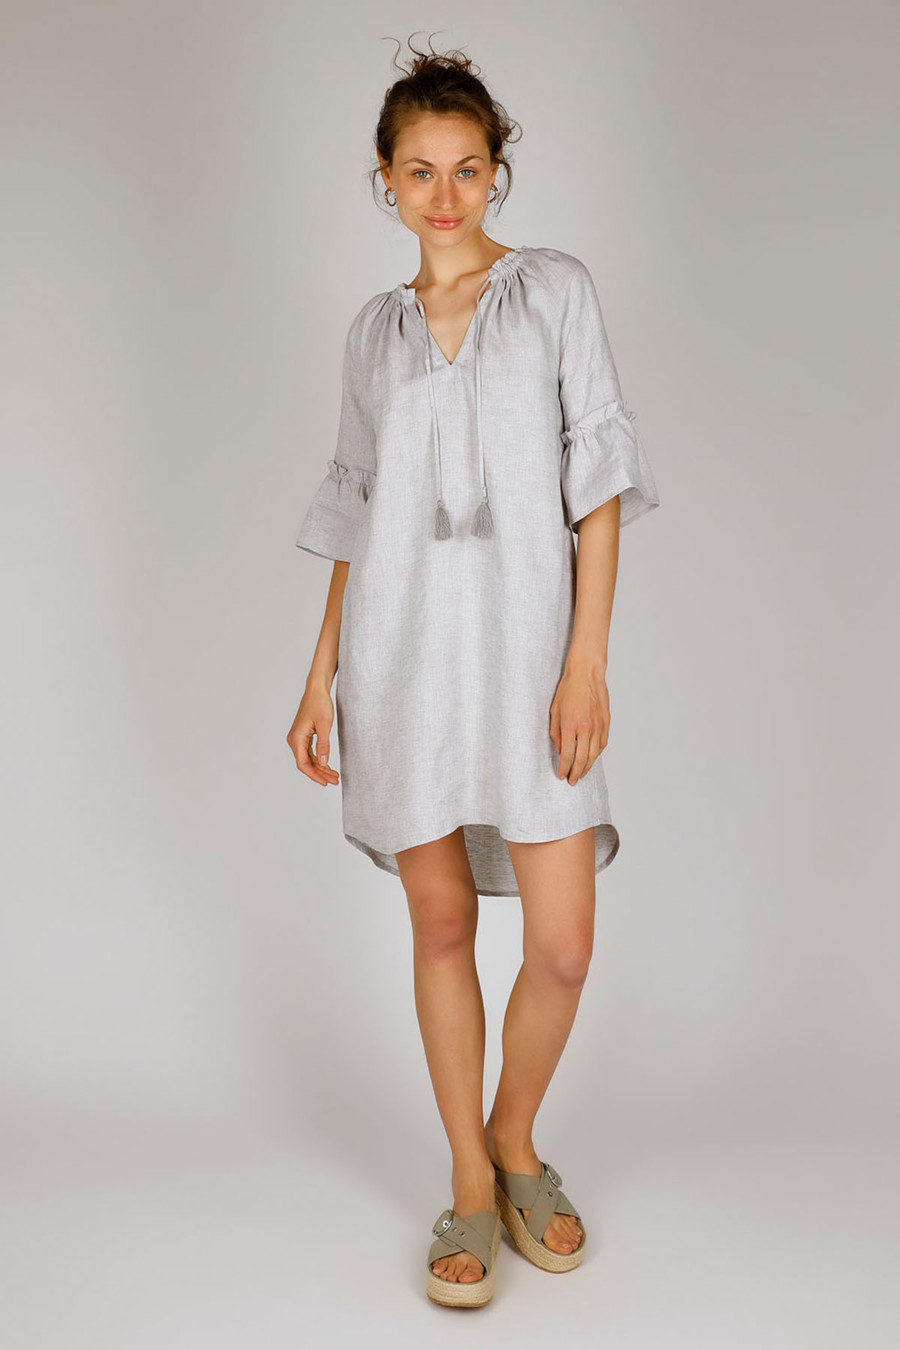 DIARY - Linen dress with Mediterranean flair - Colour: Silver